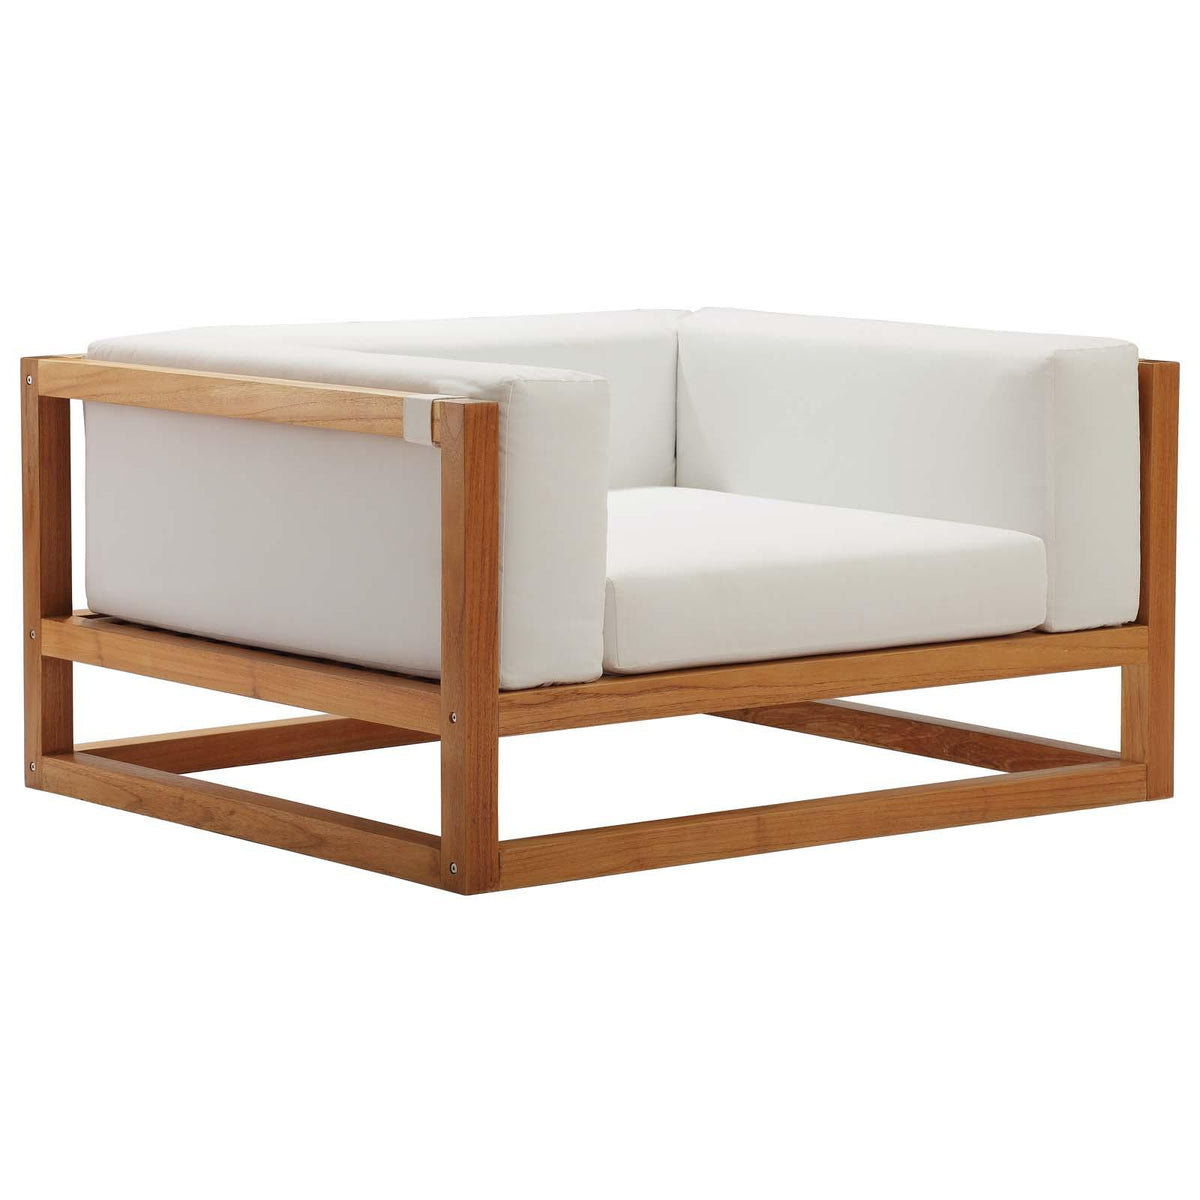 Modway Furniture Modern Newbury 3 Piece Outdoor Patio Premium Grade A Teak Wood Set - EEI-3624